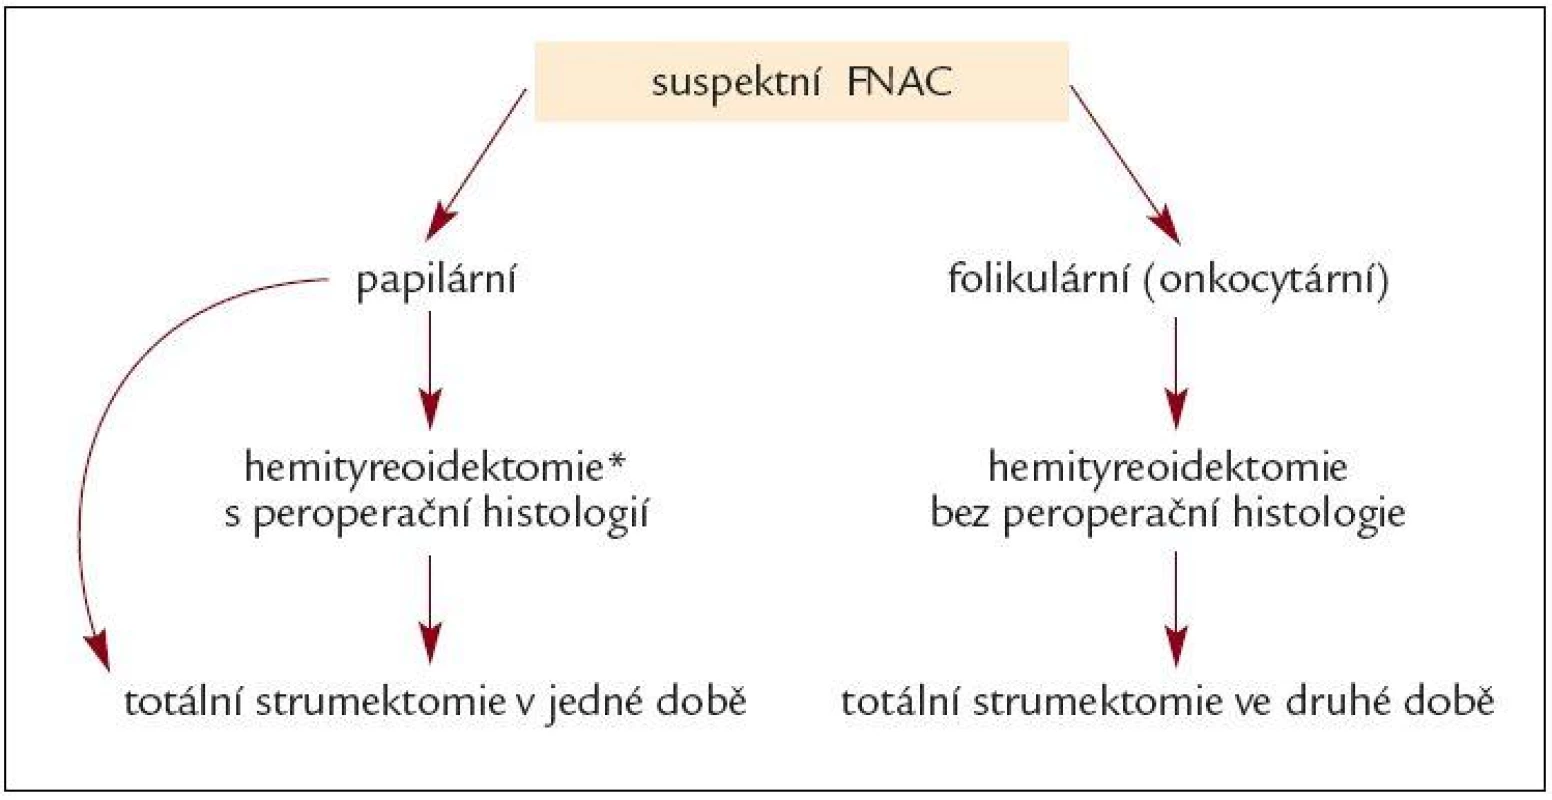 Algoritmus klinického postupu při suspektním výsledku FNAC.